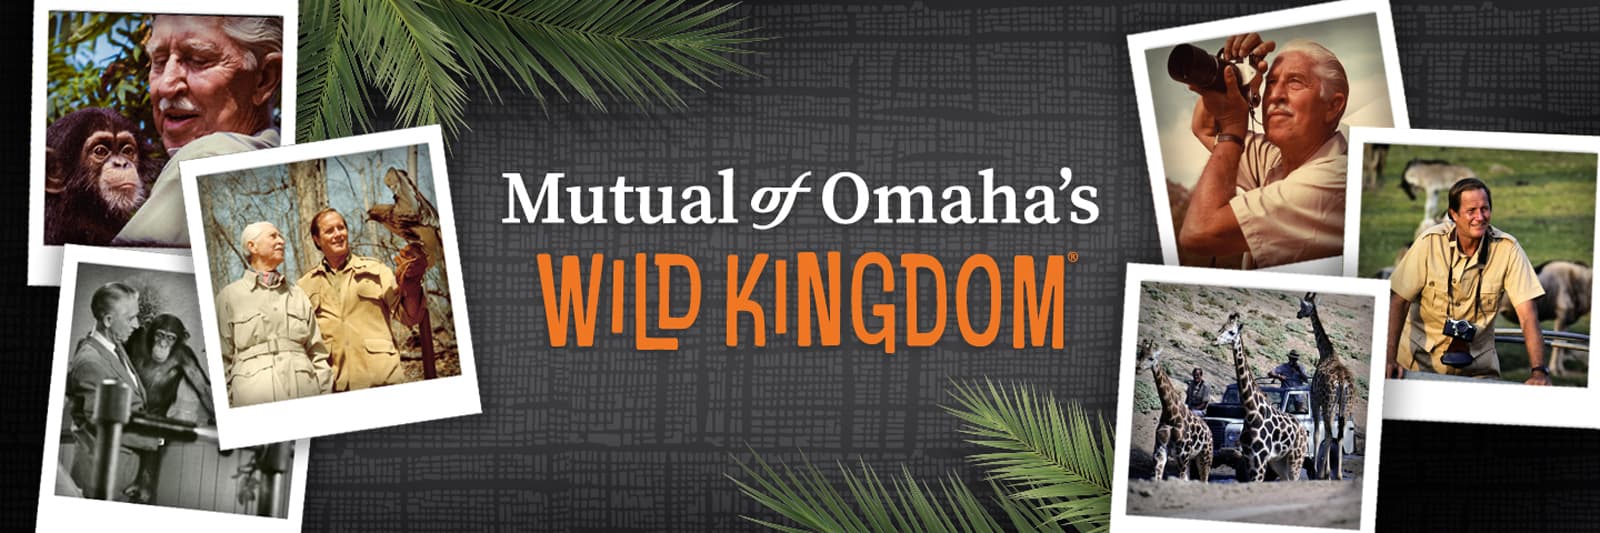 Mutual of Omaha's Wild Kingdom Banner